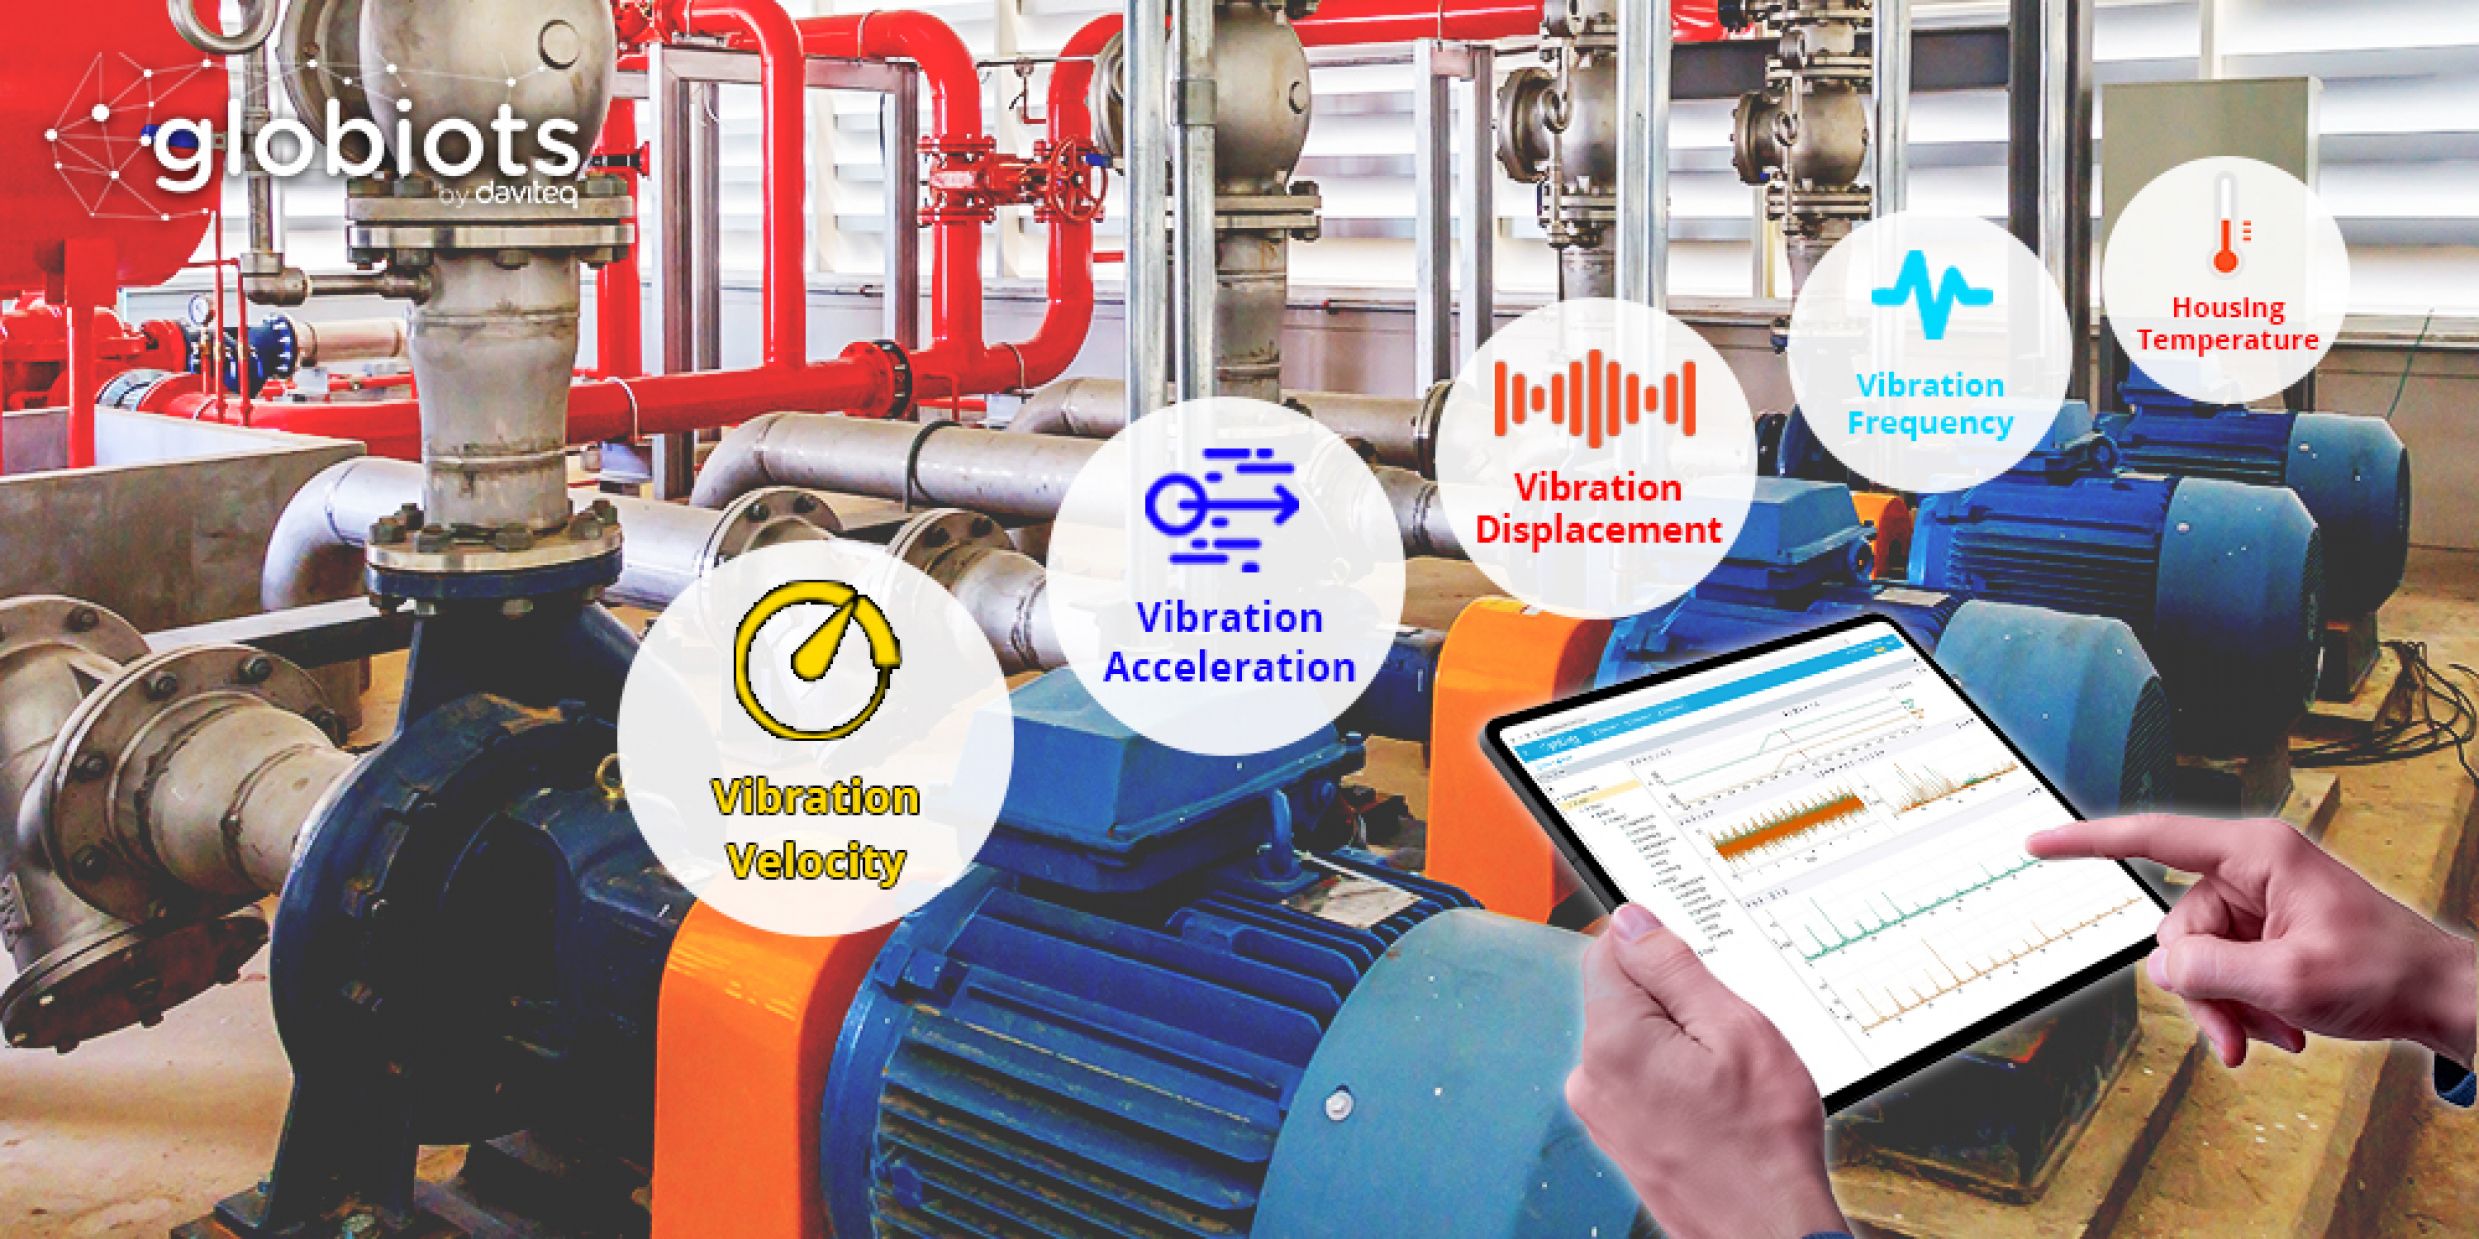 SubGhz Vibration - IoT system for machine vibration monitoring